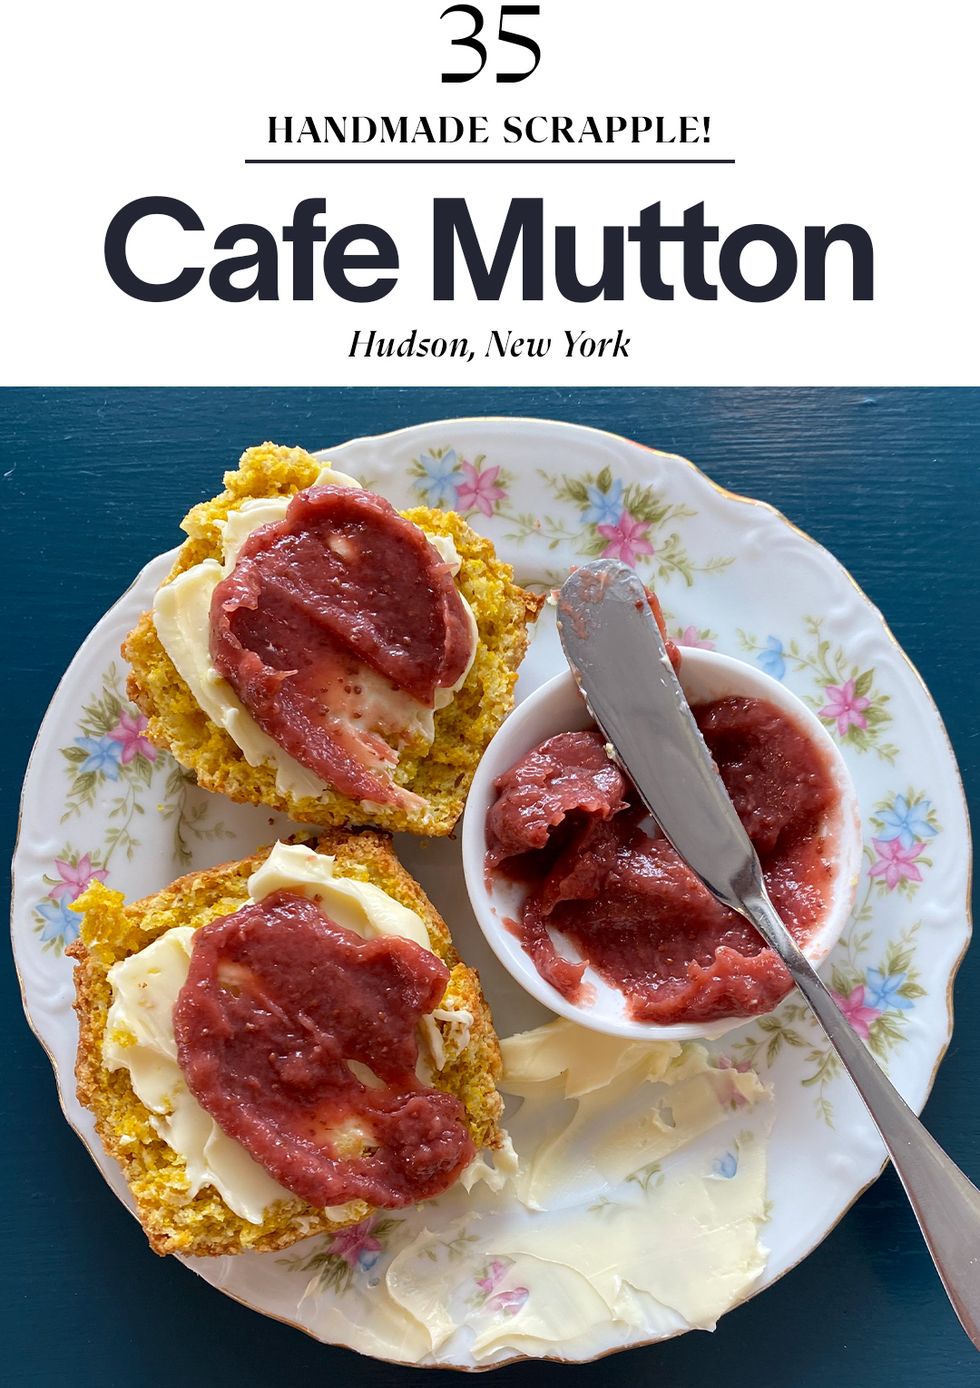 cafe mutton hudson new york